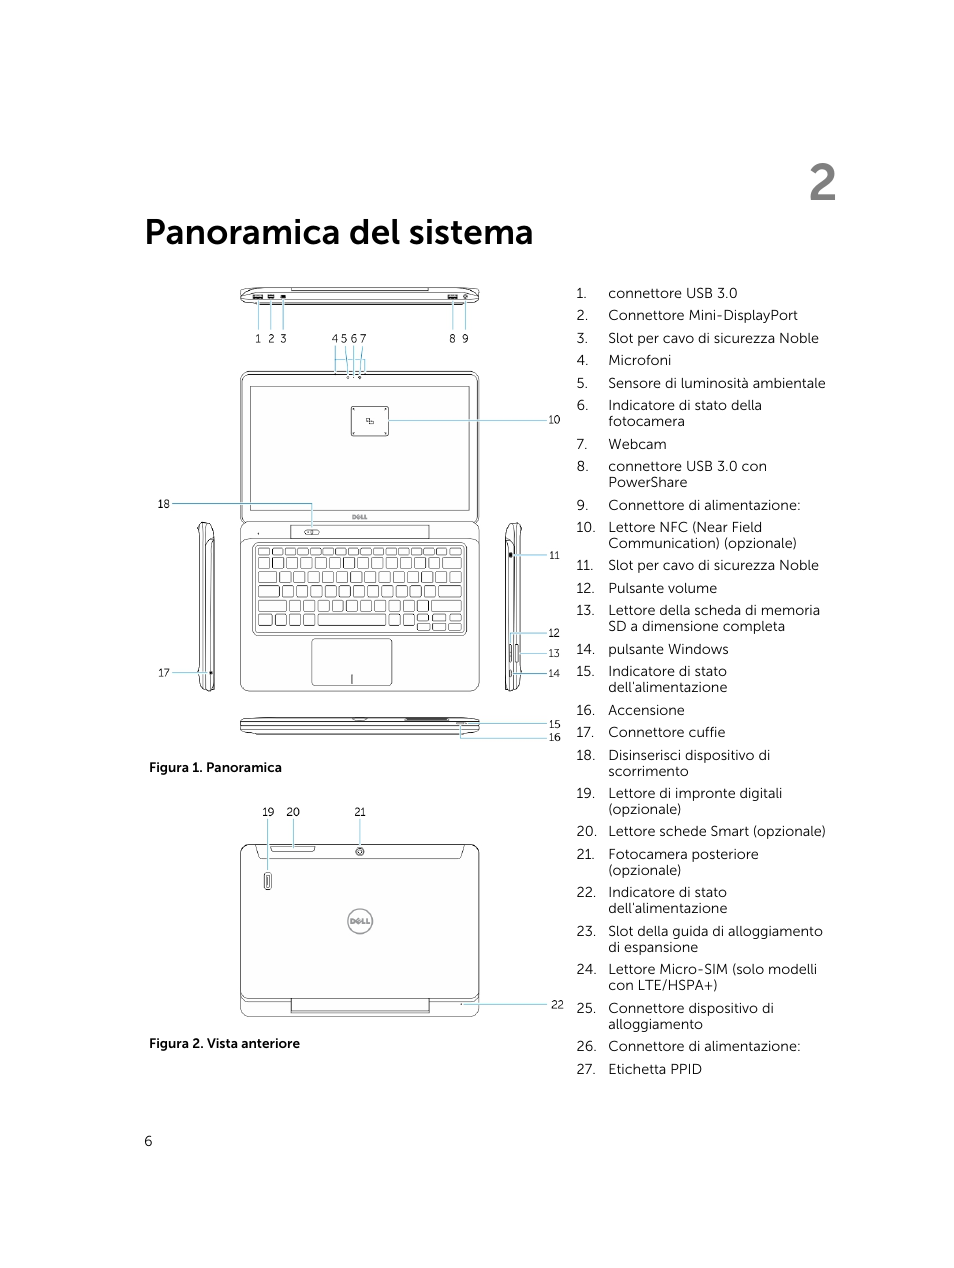 Panoramica del sistema, 2 panoramica del sistema | Dell Latitude 13 2-in-1 (7350, Late 2014) Manuale d'uso | Pagina 6 / 50